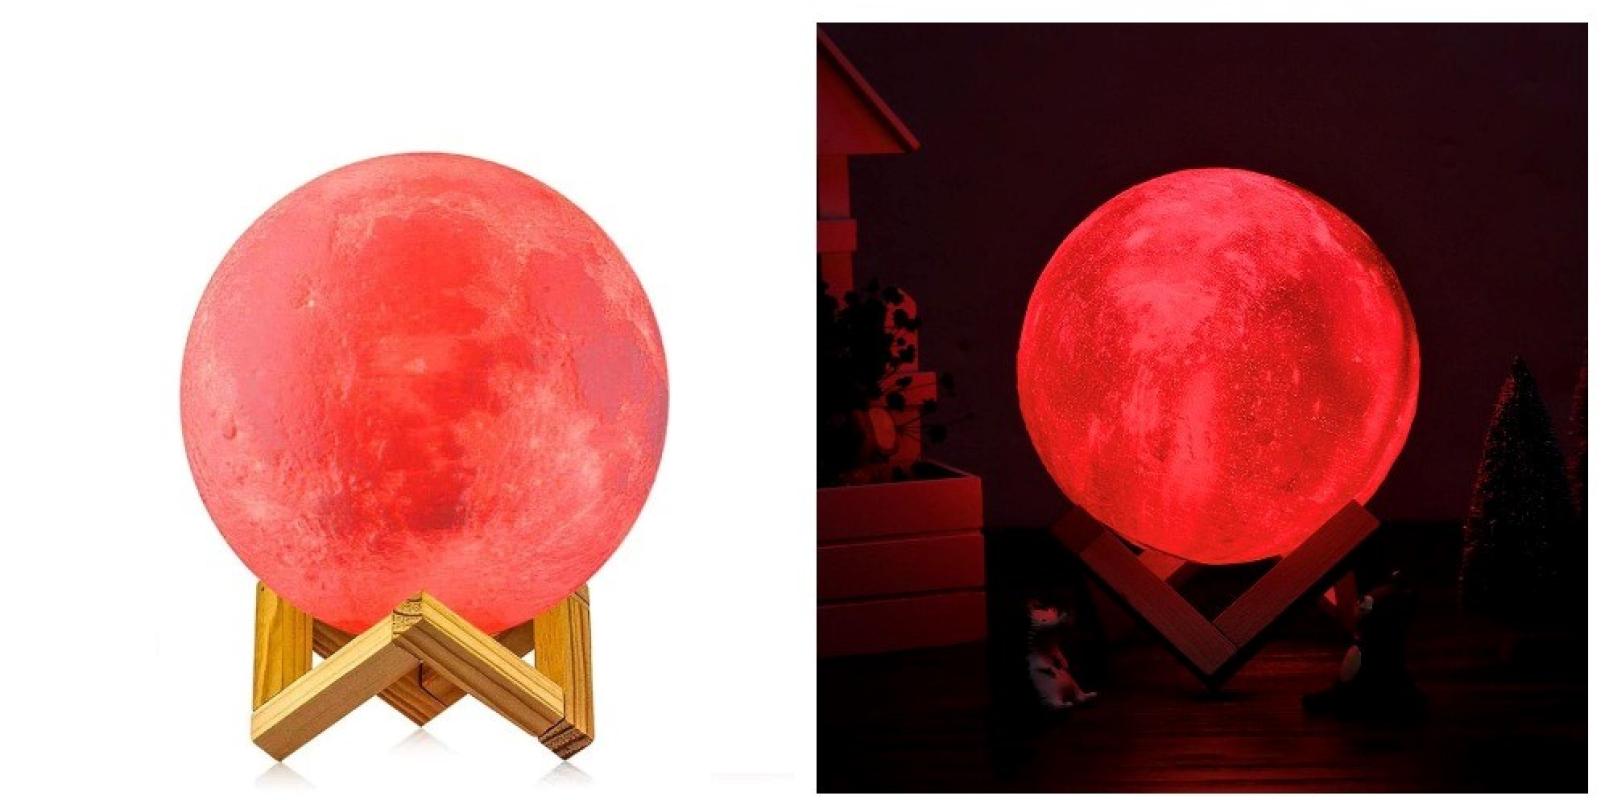 Lampa 3D Lună cu suport din lemn 3D Moon Lamp USB LED Night Light Moonlight Touch Sensor